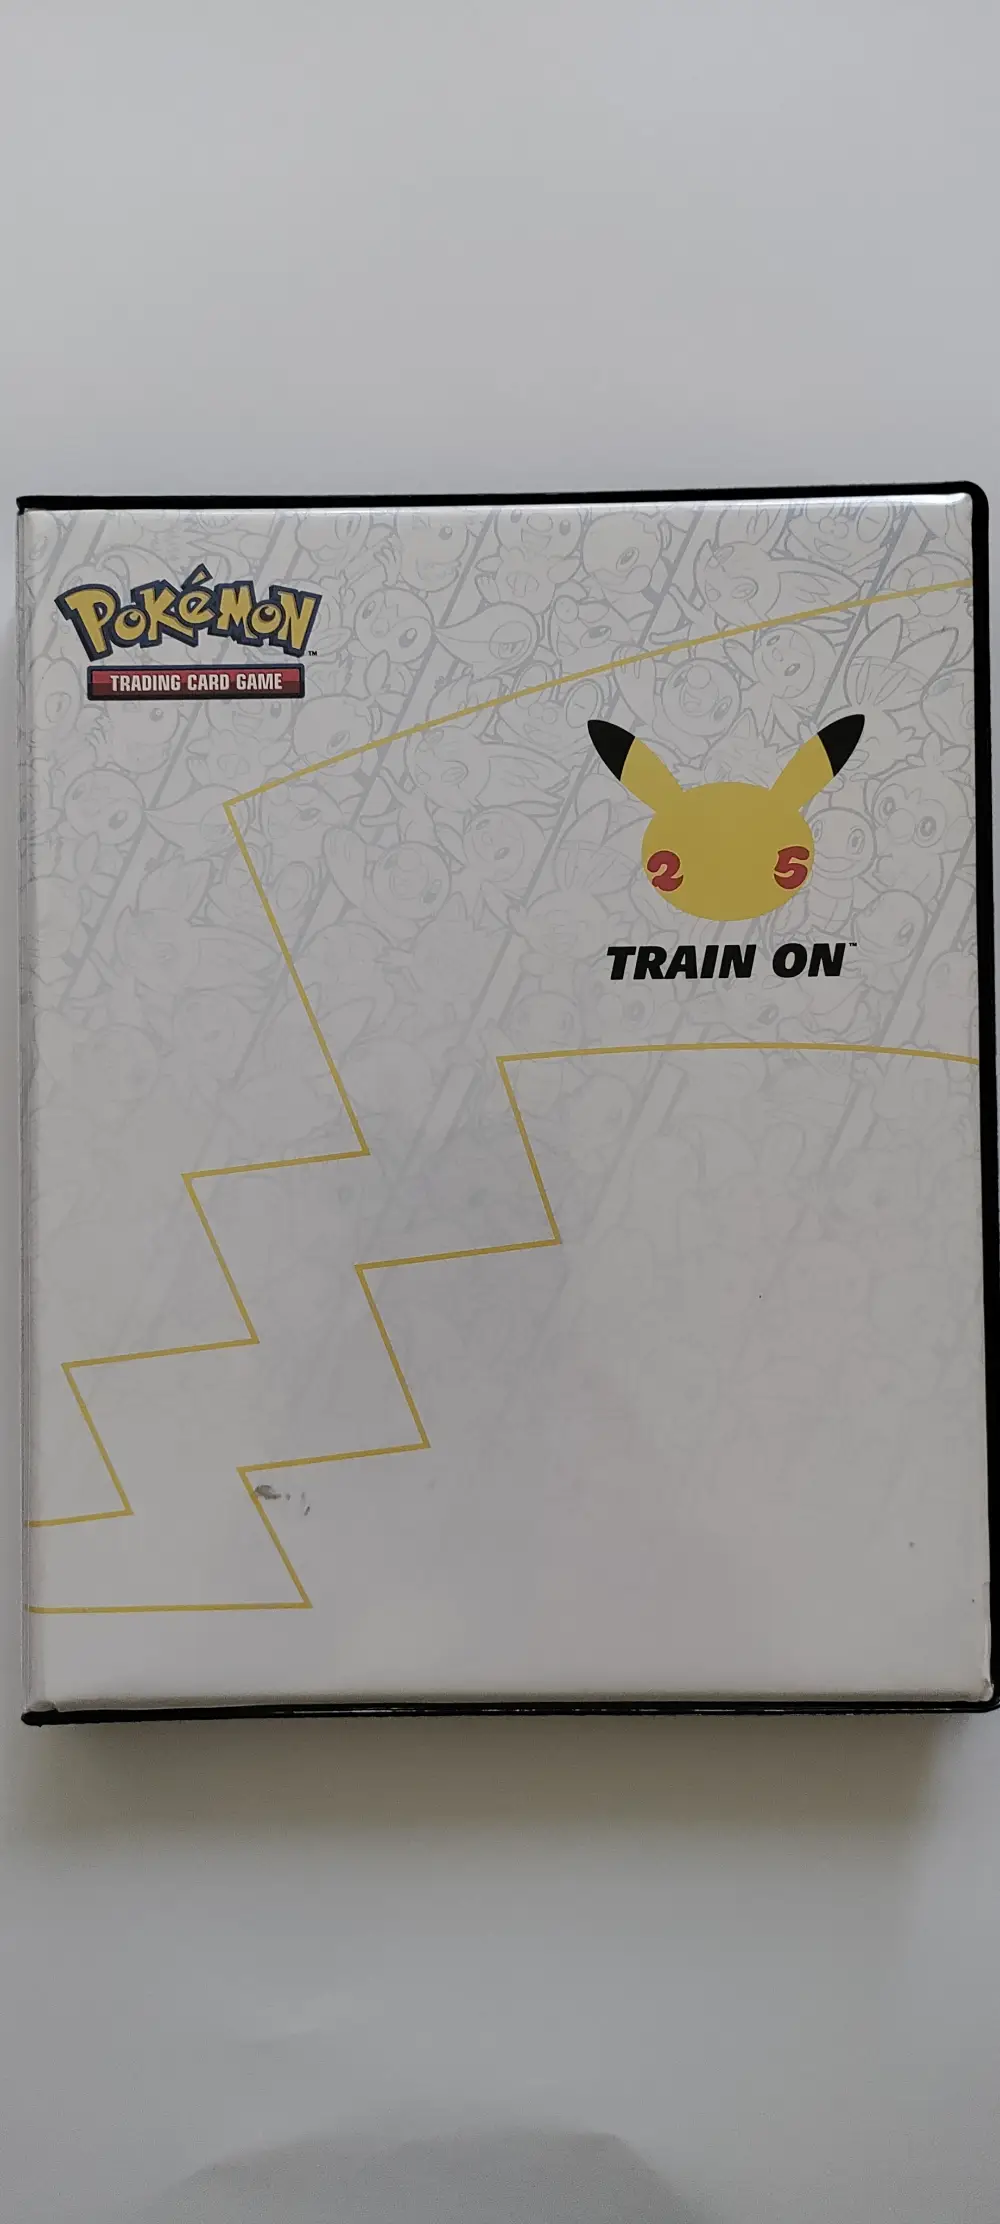 Pokémon Pokemon mappe med jumbo kort